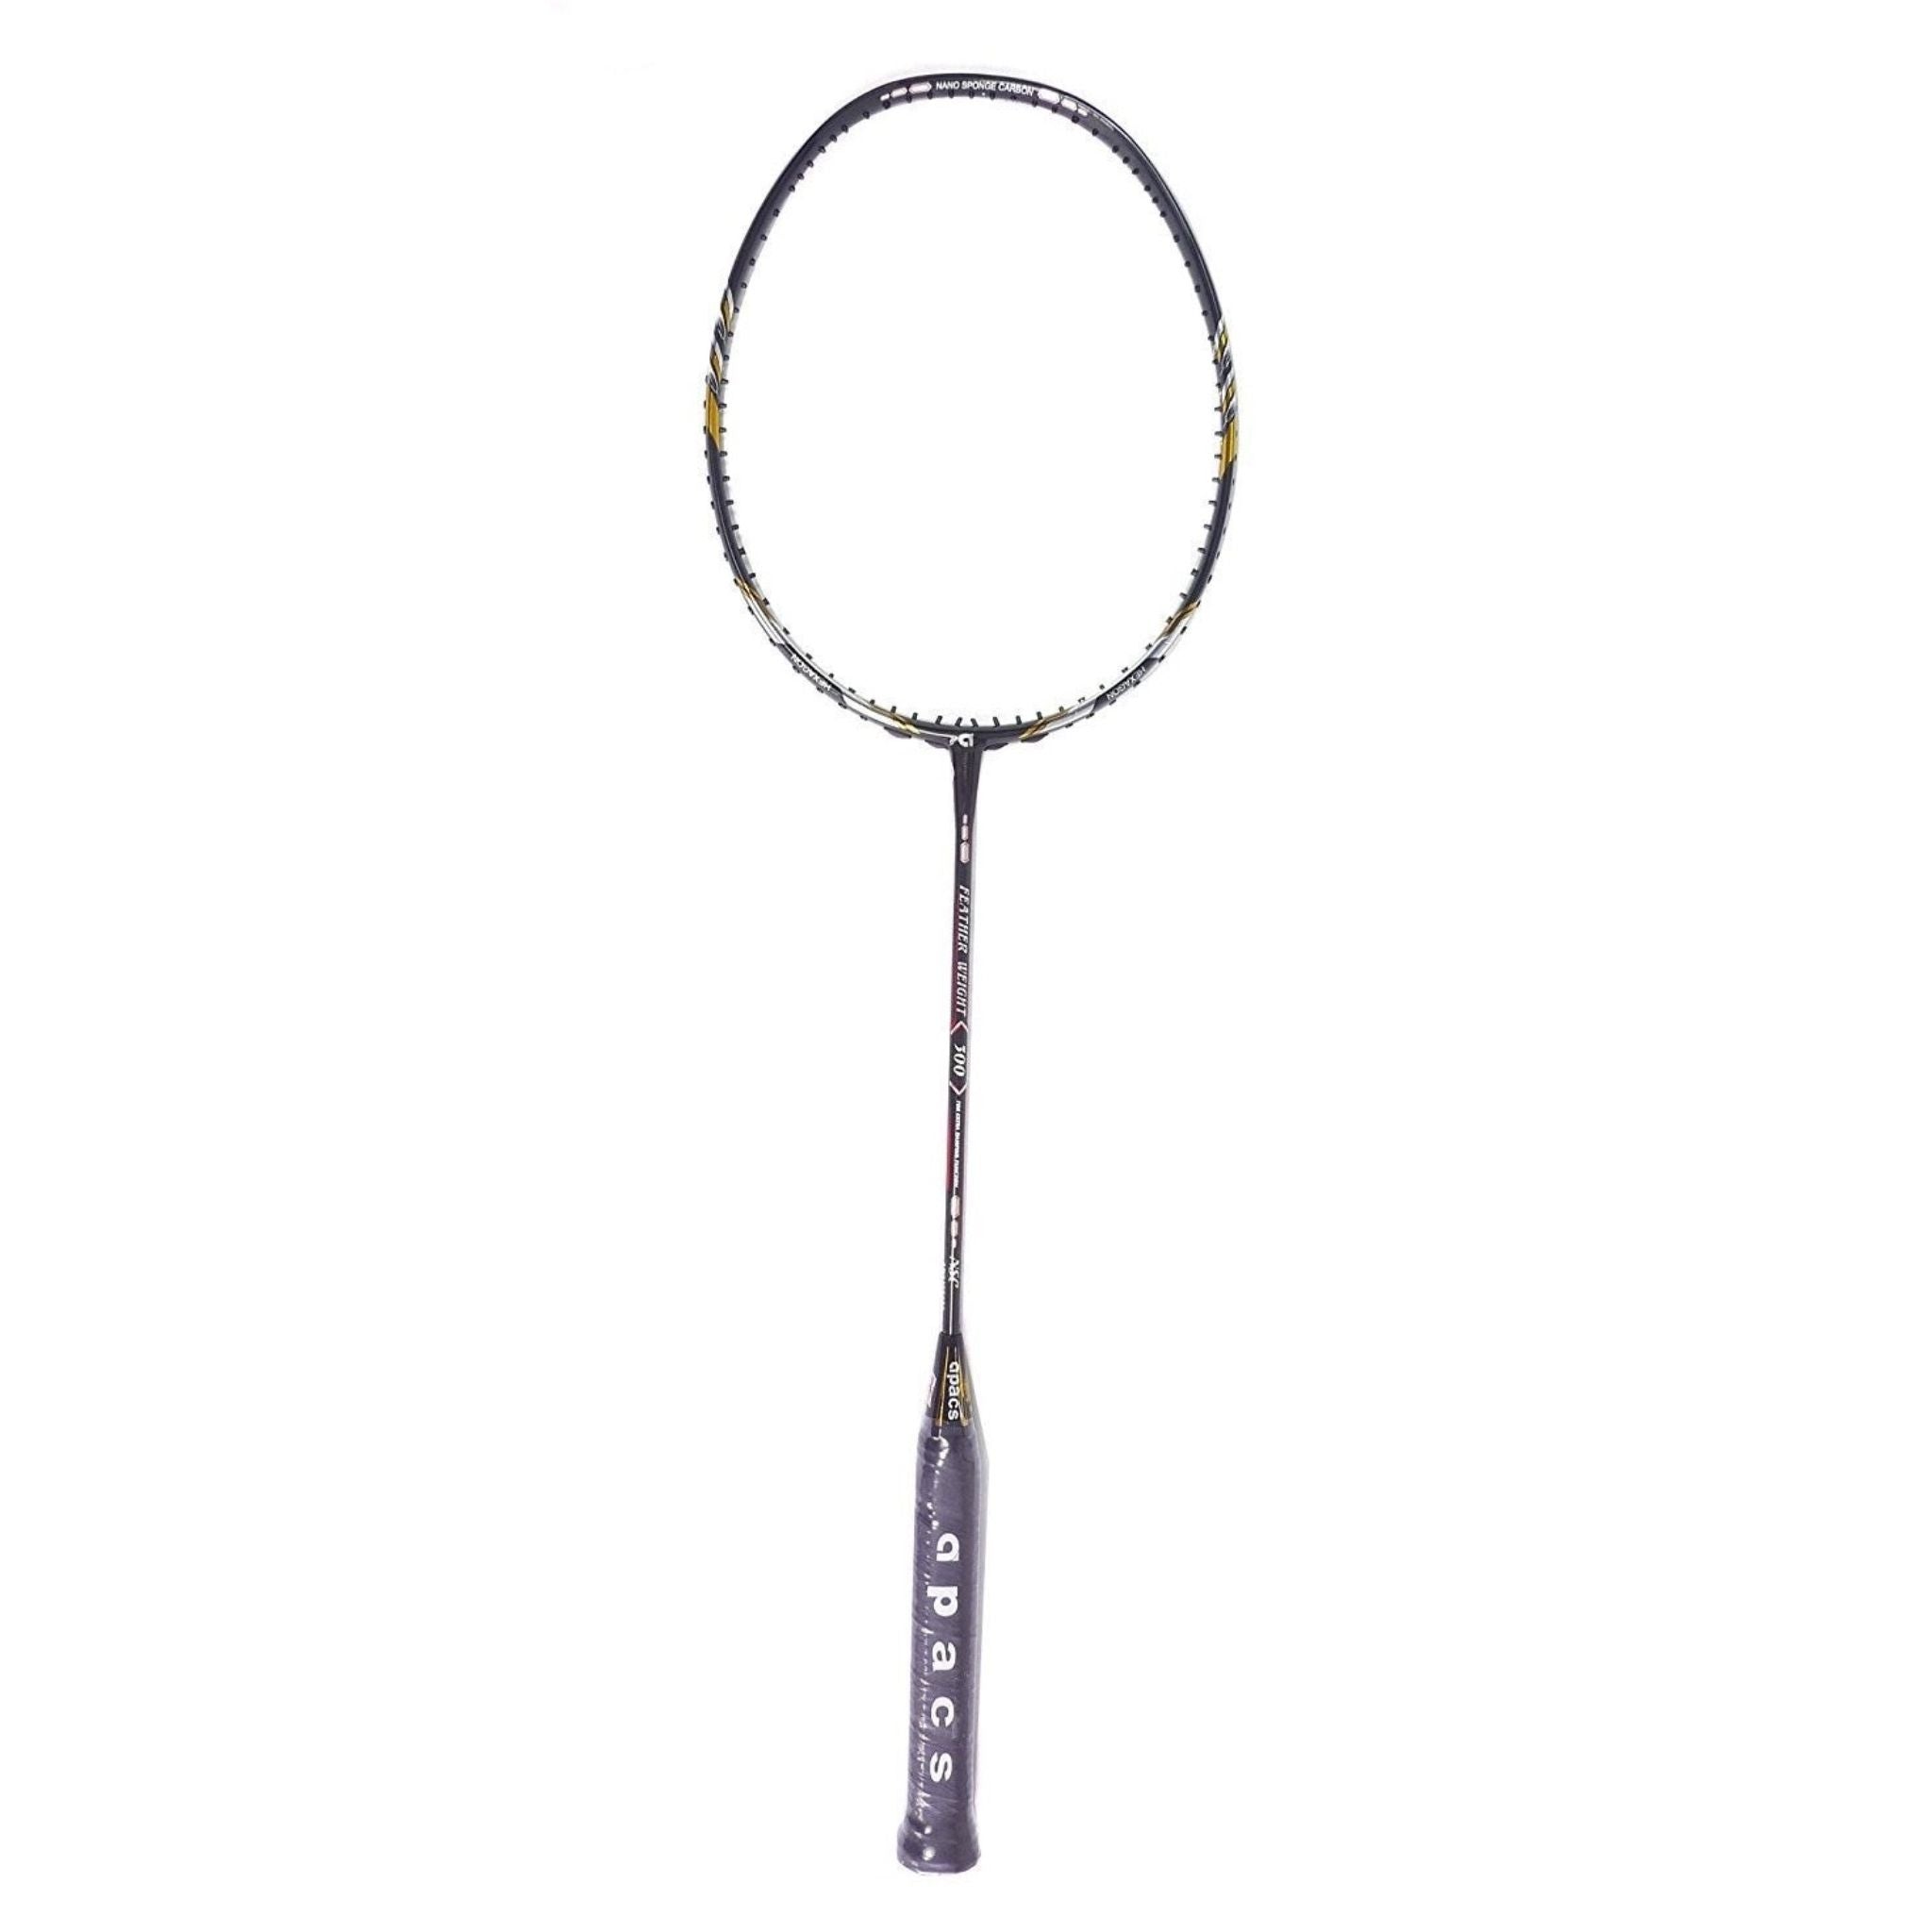 APACS Feather Weight 300 Badminton Racket